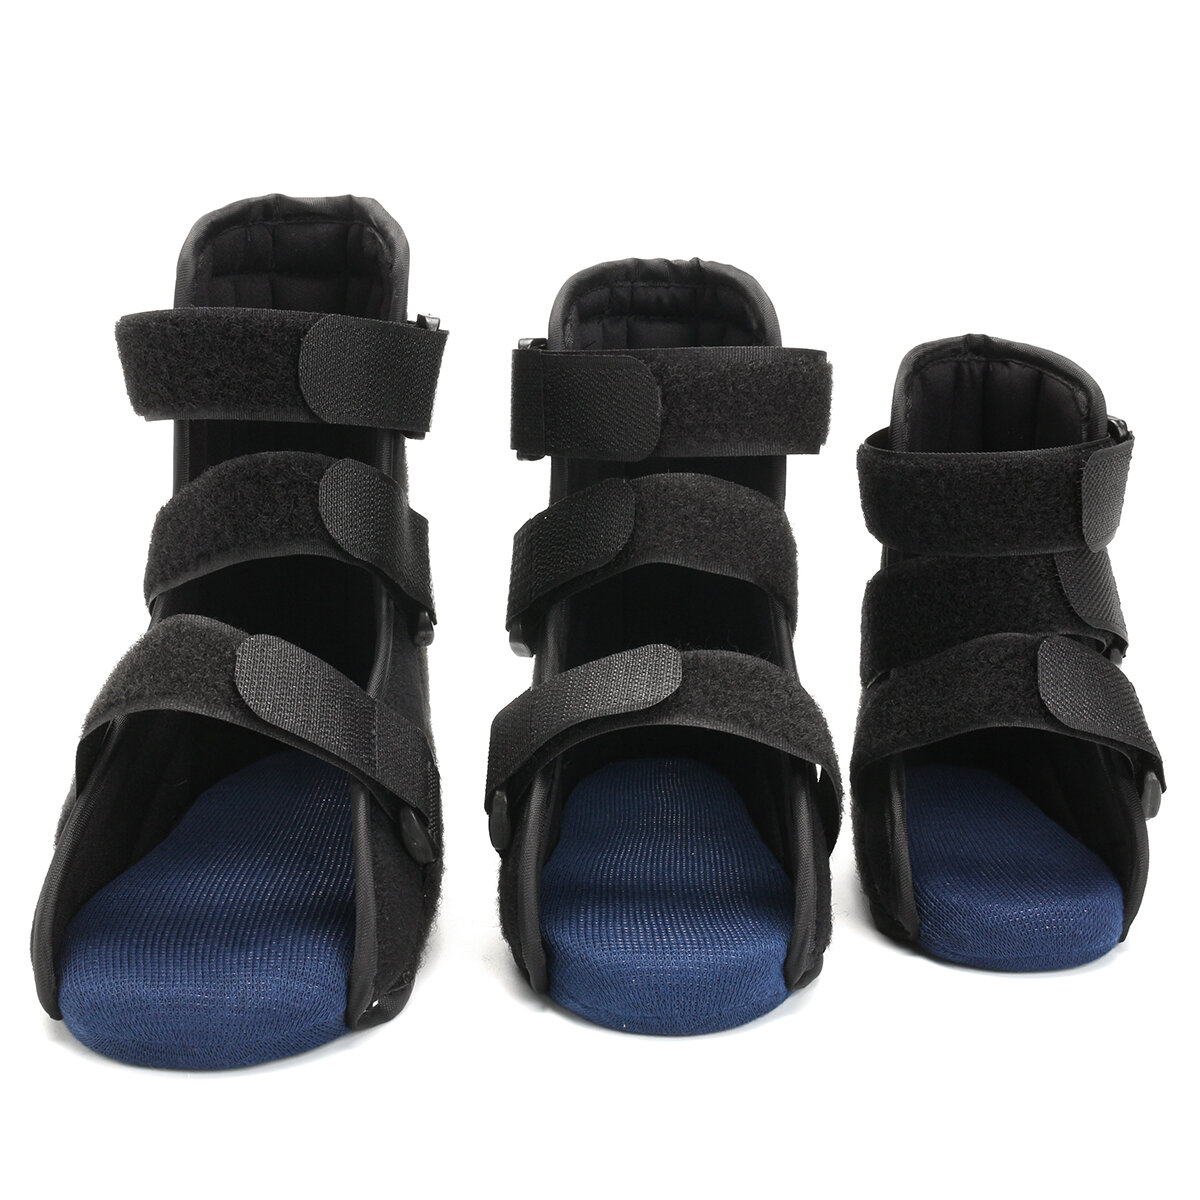 

Medical Ankle Splint Boot Brace Support Tendinitis Plantar Fasciitis Heel Foot Splint For Child Kids